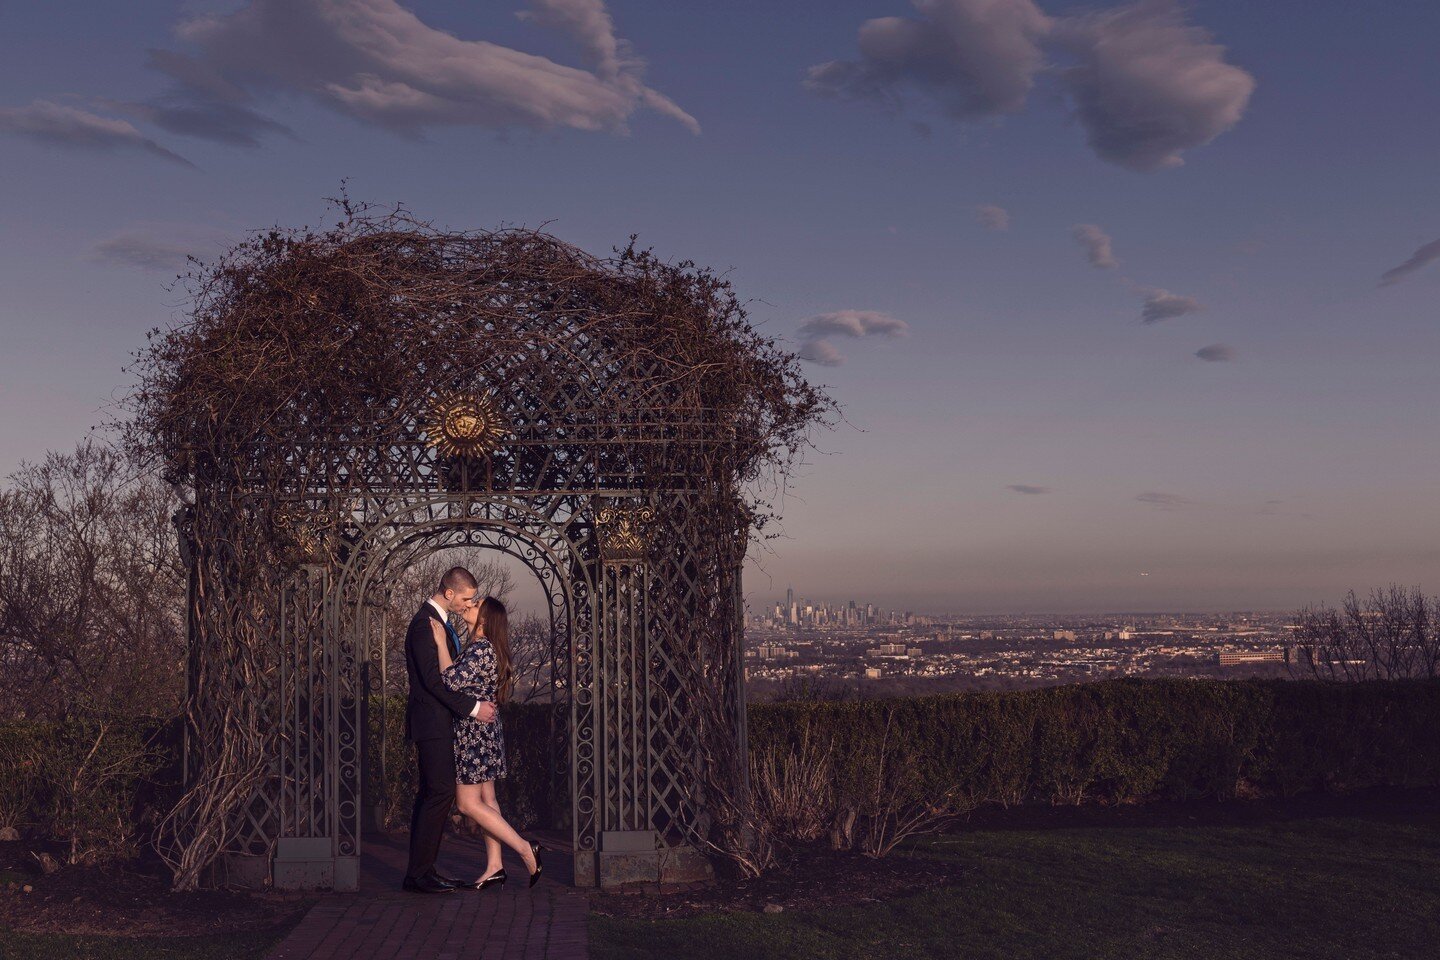 Romantic Art with the NYC skyline in the distance.

#miamiweddingphotographer #nycweddingphotographer #miamiweddings #southfloridaweddings #weddingrings #weddingring #engagementrings #engagementring #lennyandmelissa #marryme #weddingweekend #candids 